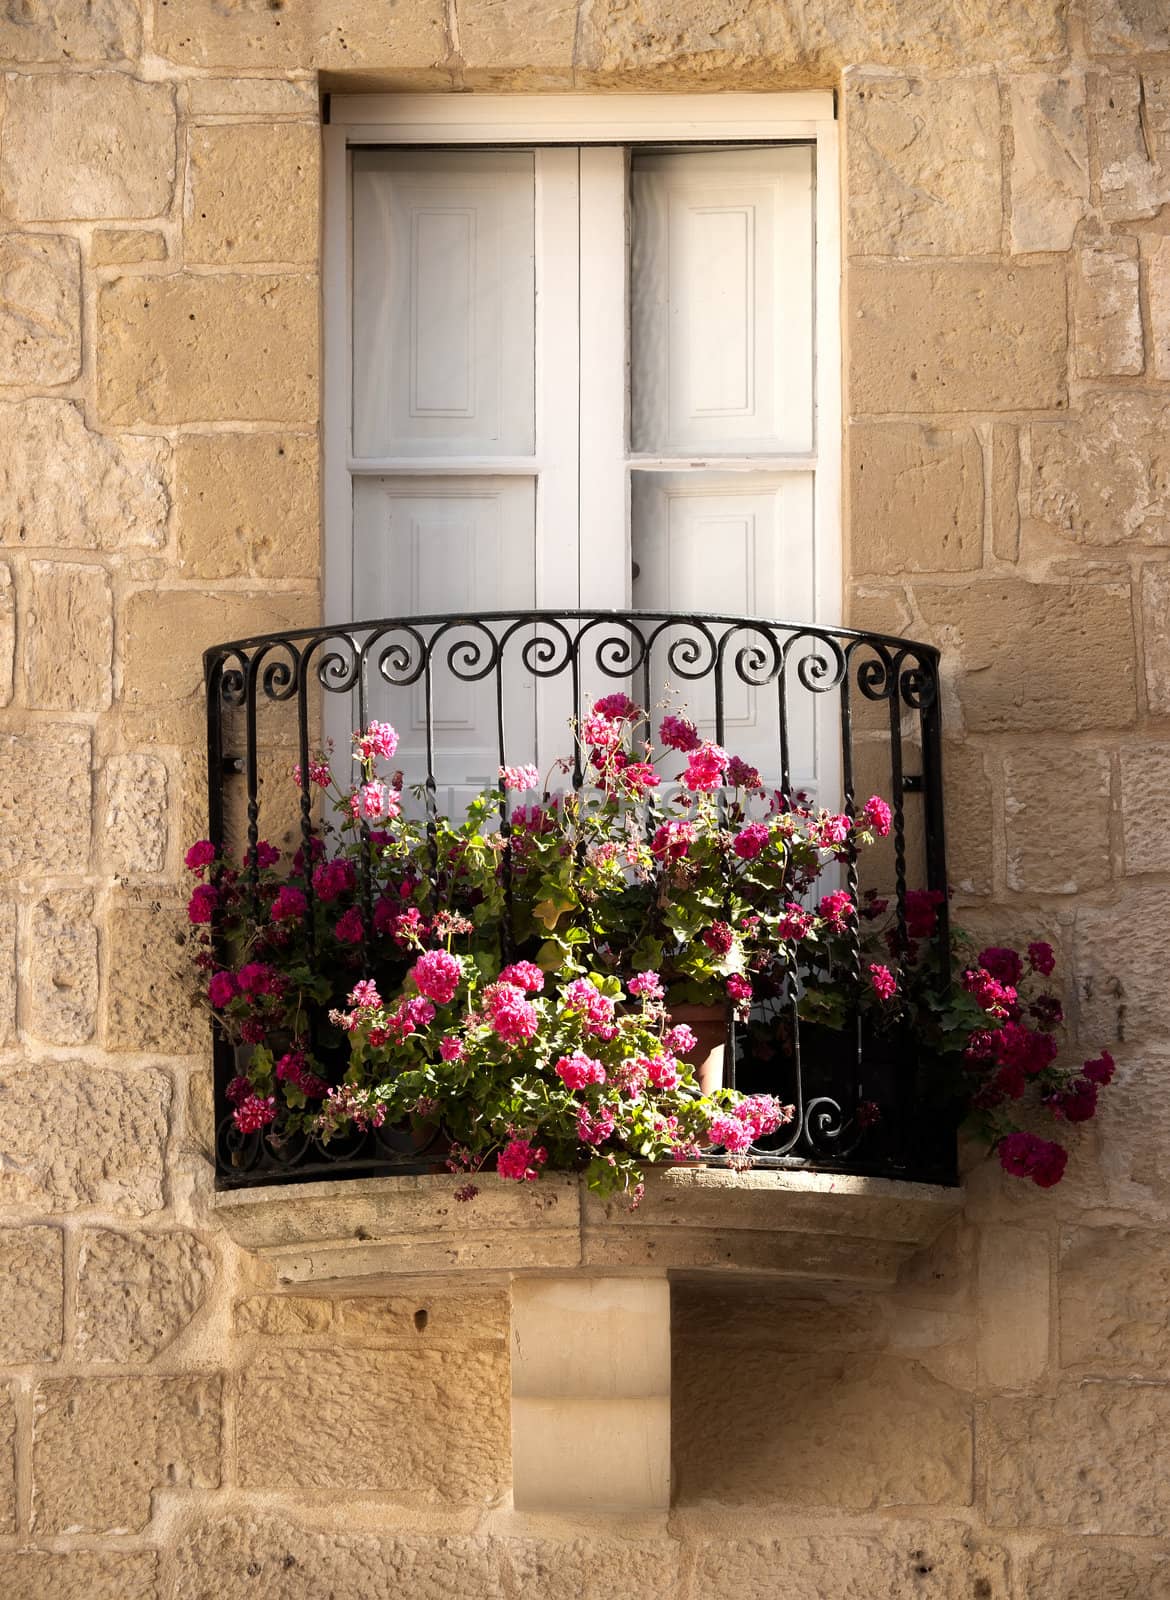 Quaint Little Balcony by PhotoWorks